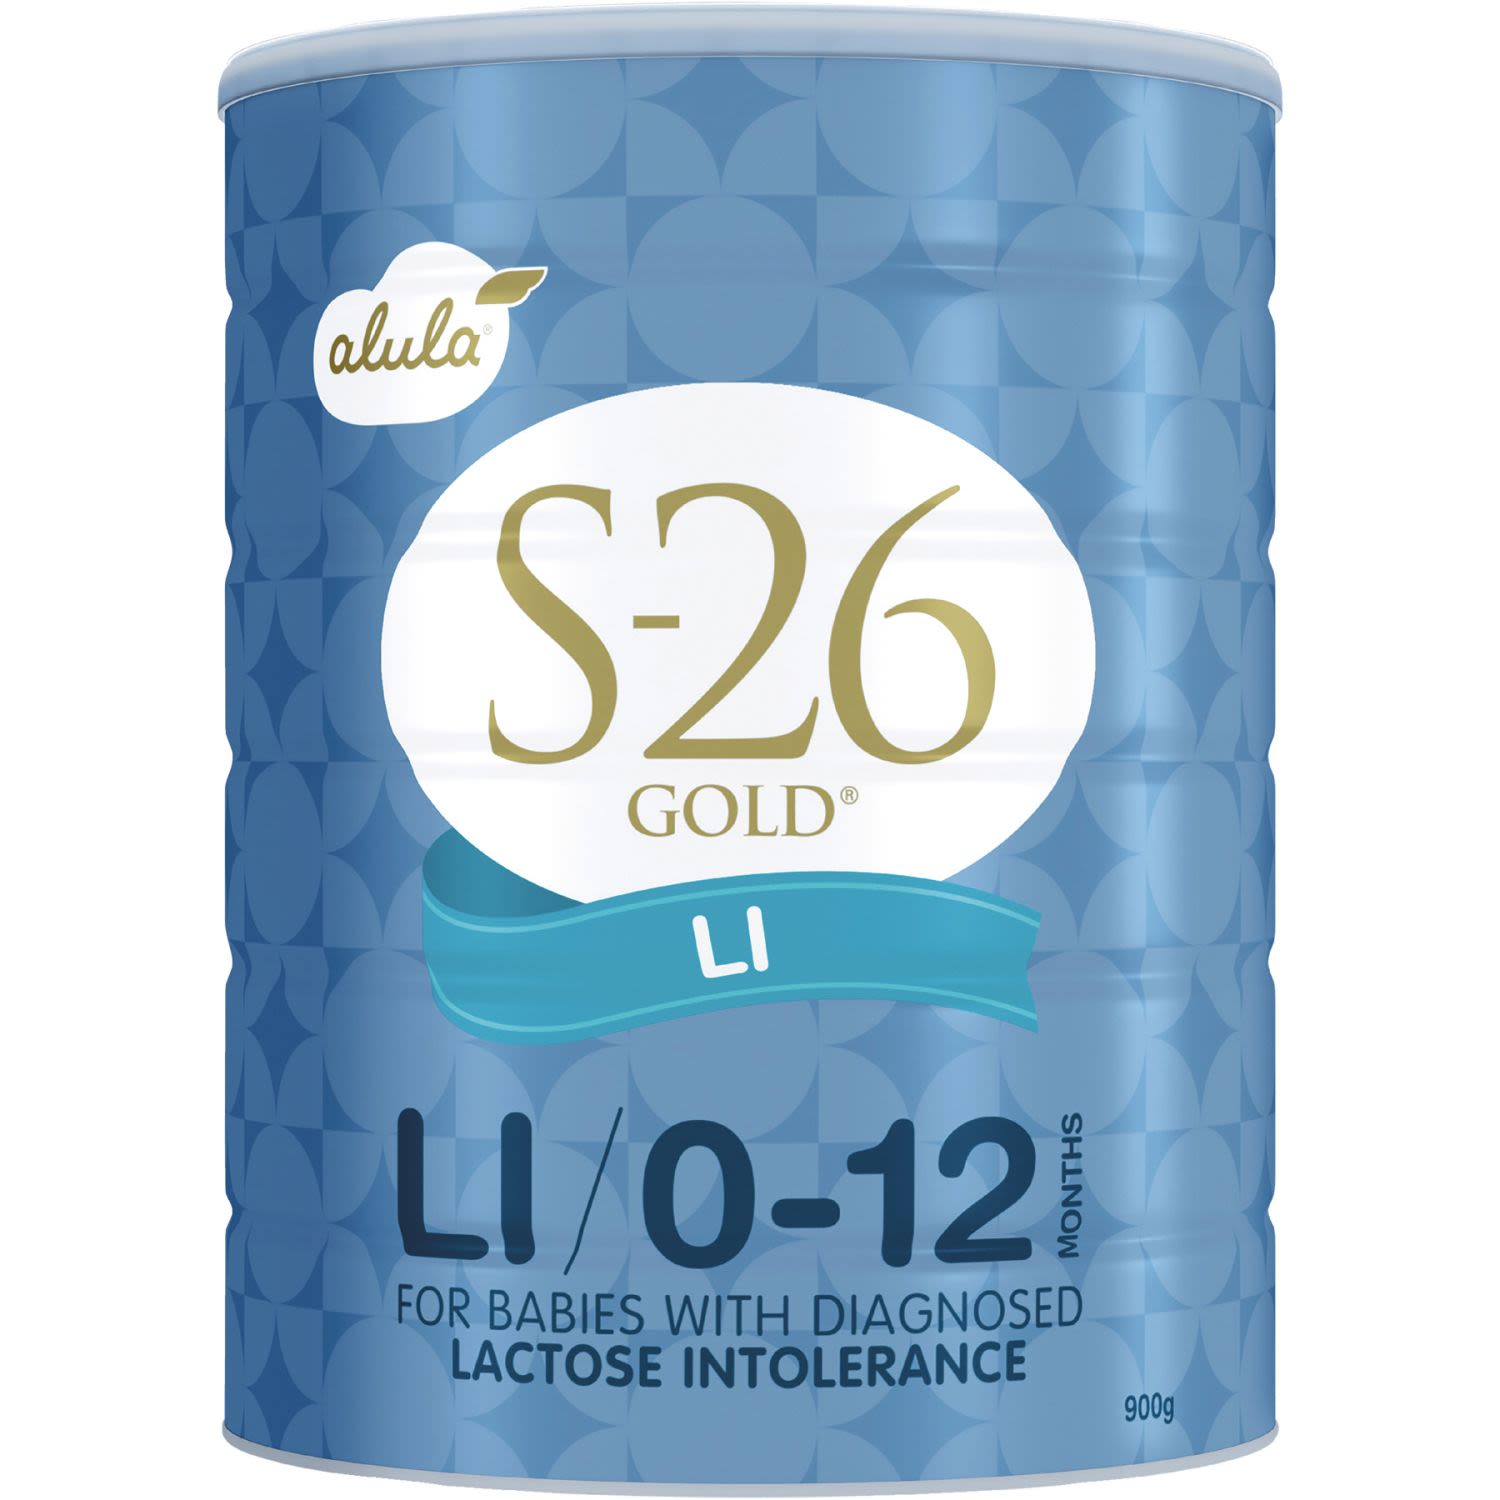 S-26 Alula Gold LI, Lactose Intolerance Infant Formula, 900 Gram